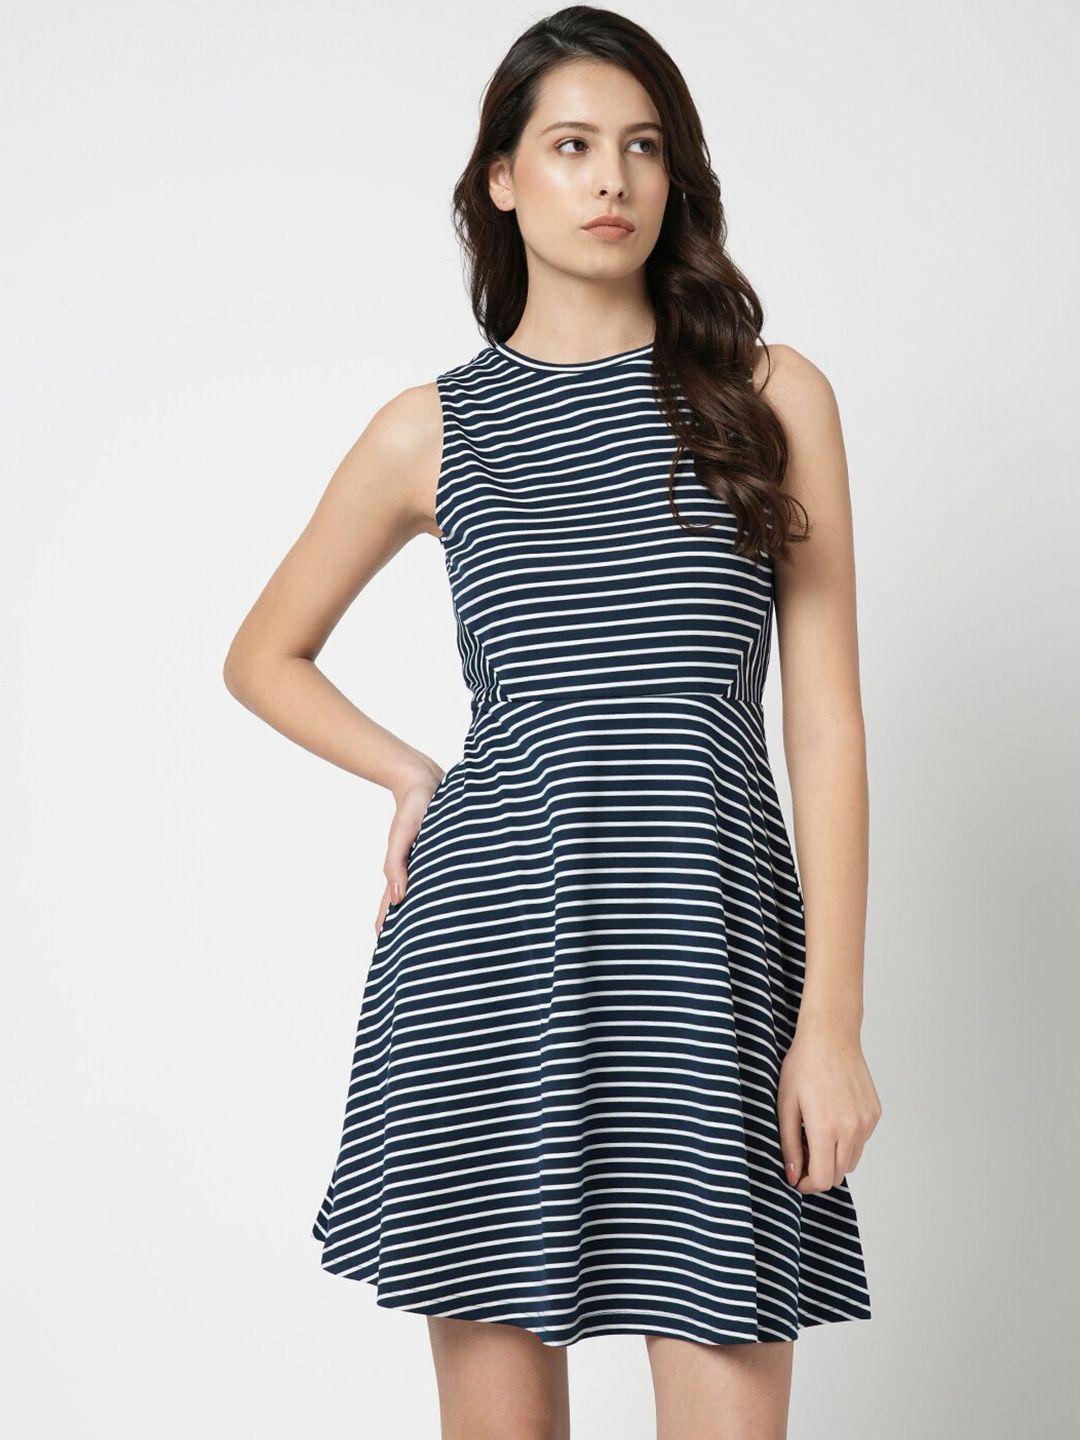 vero moda navy blue striped fit & flare dress